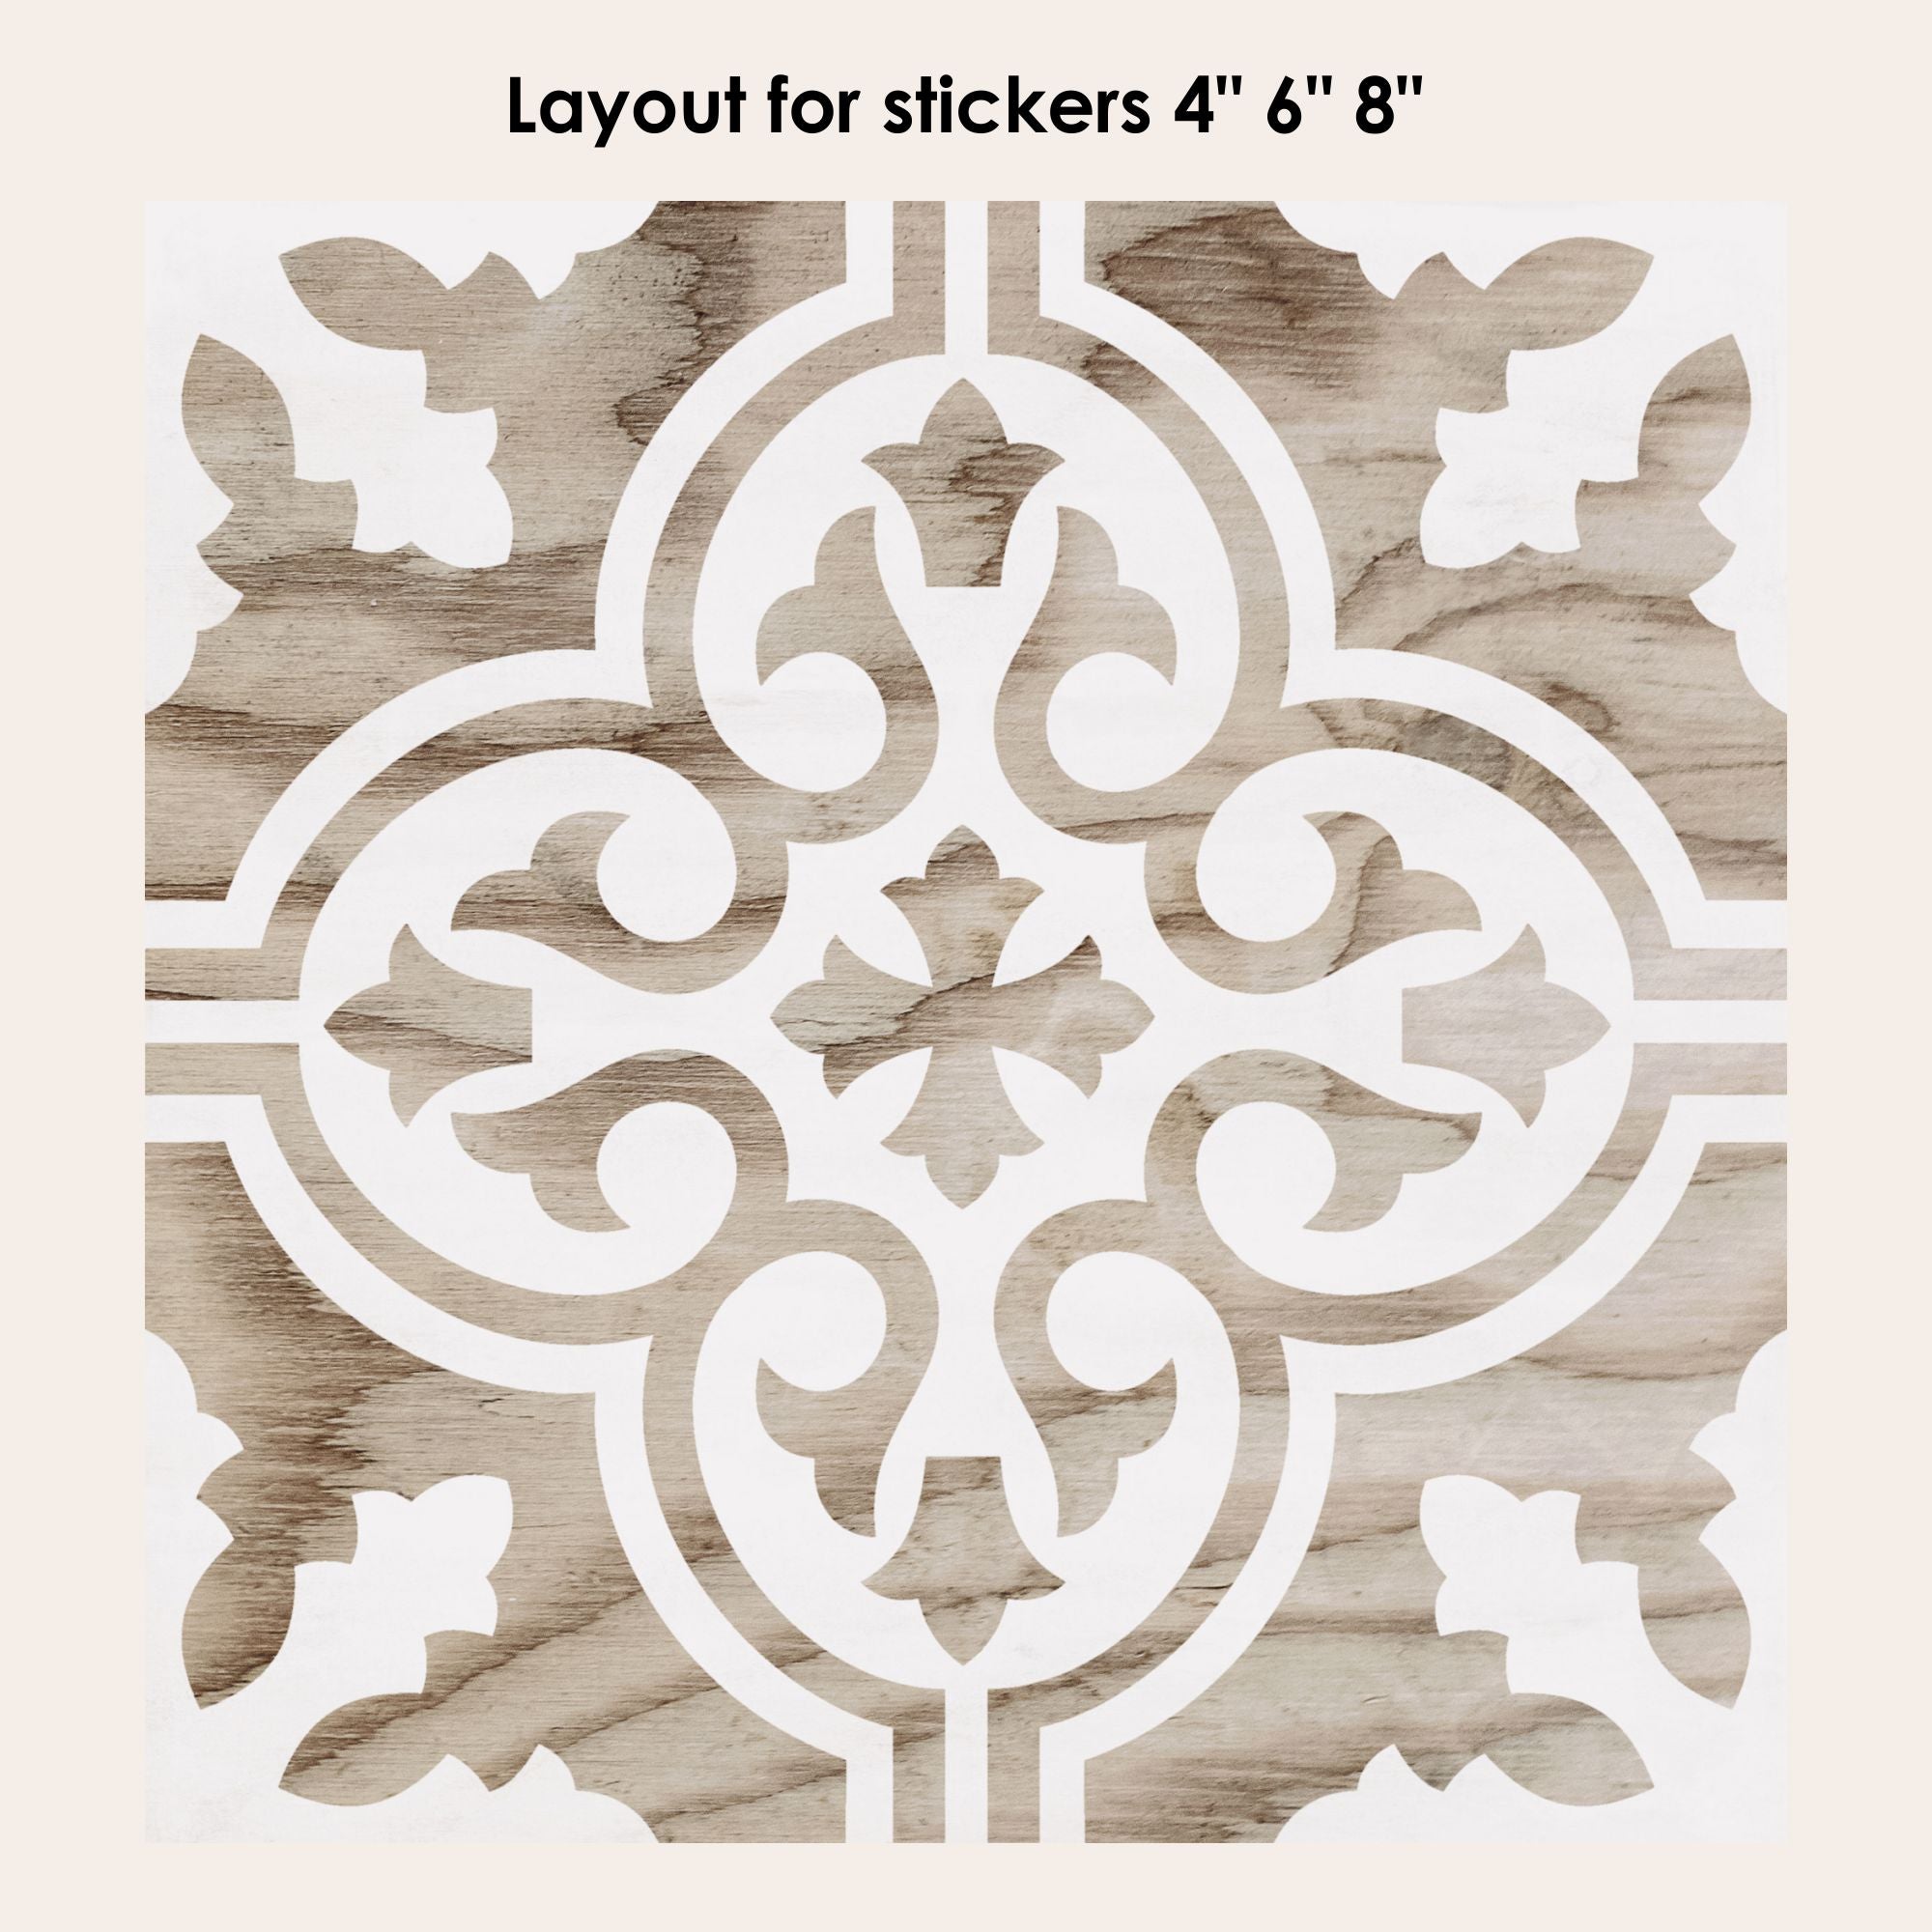 Floc in Wood Vinyl Tile Sticker